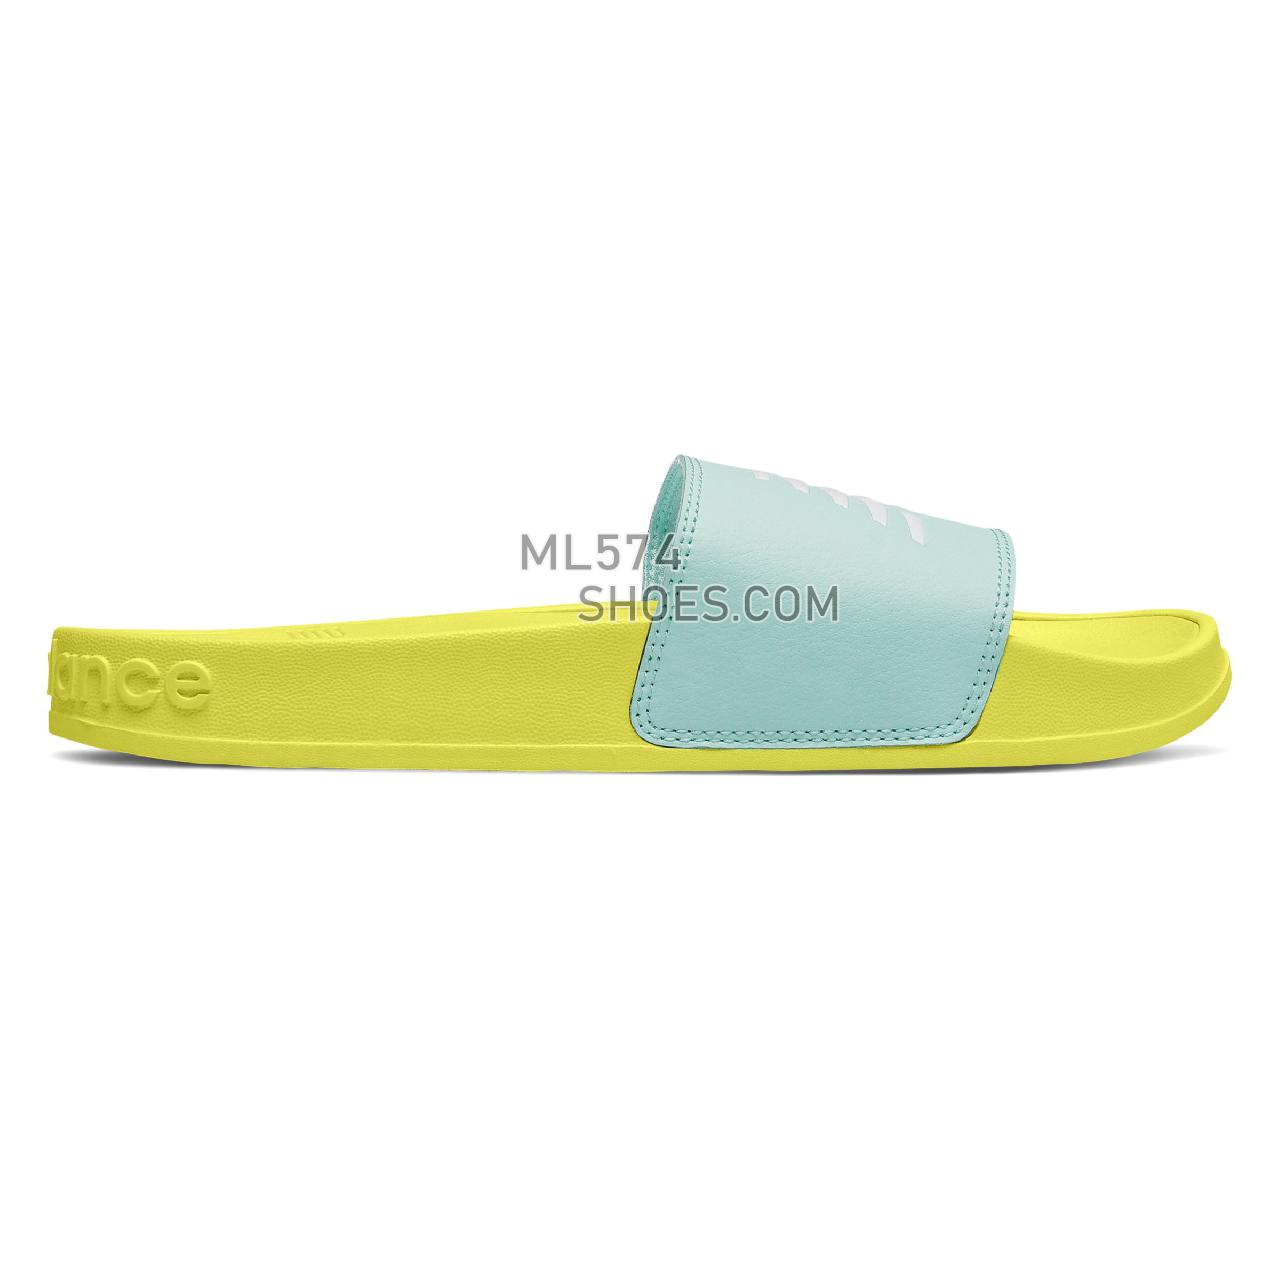 New Balance 200 - Women's Flip Flops - Lemon Slush with Munsell White and Bali Blue - SWF200LS